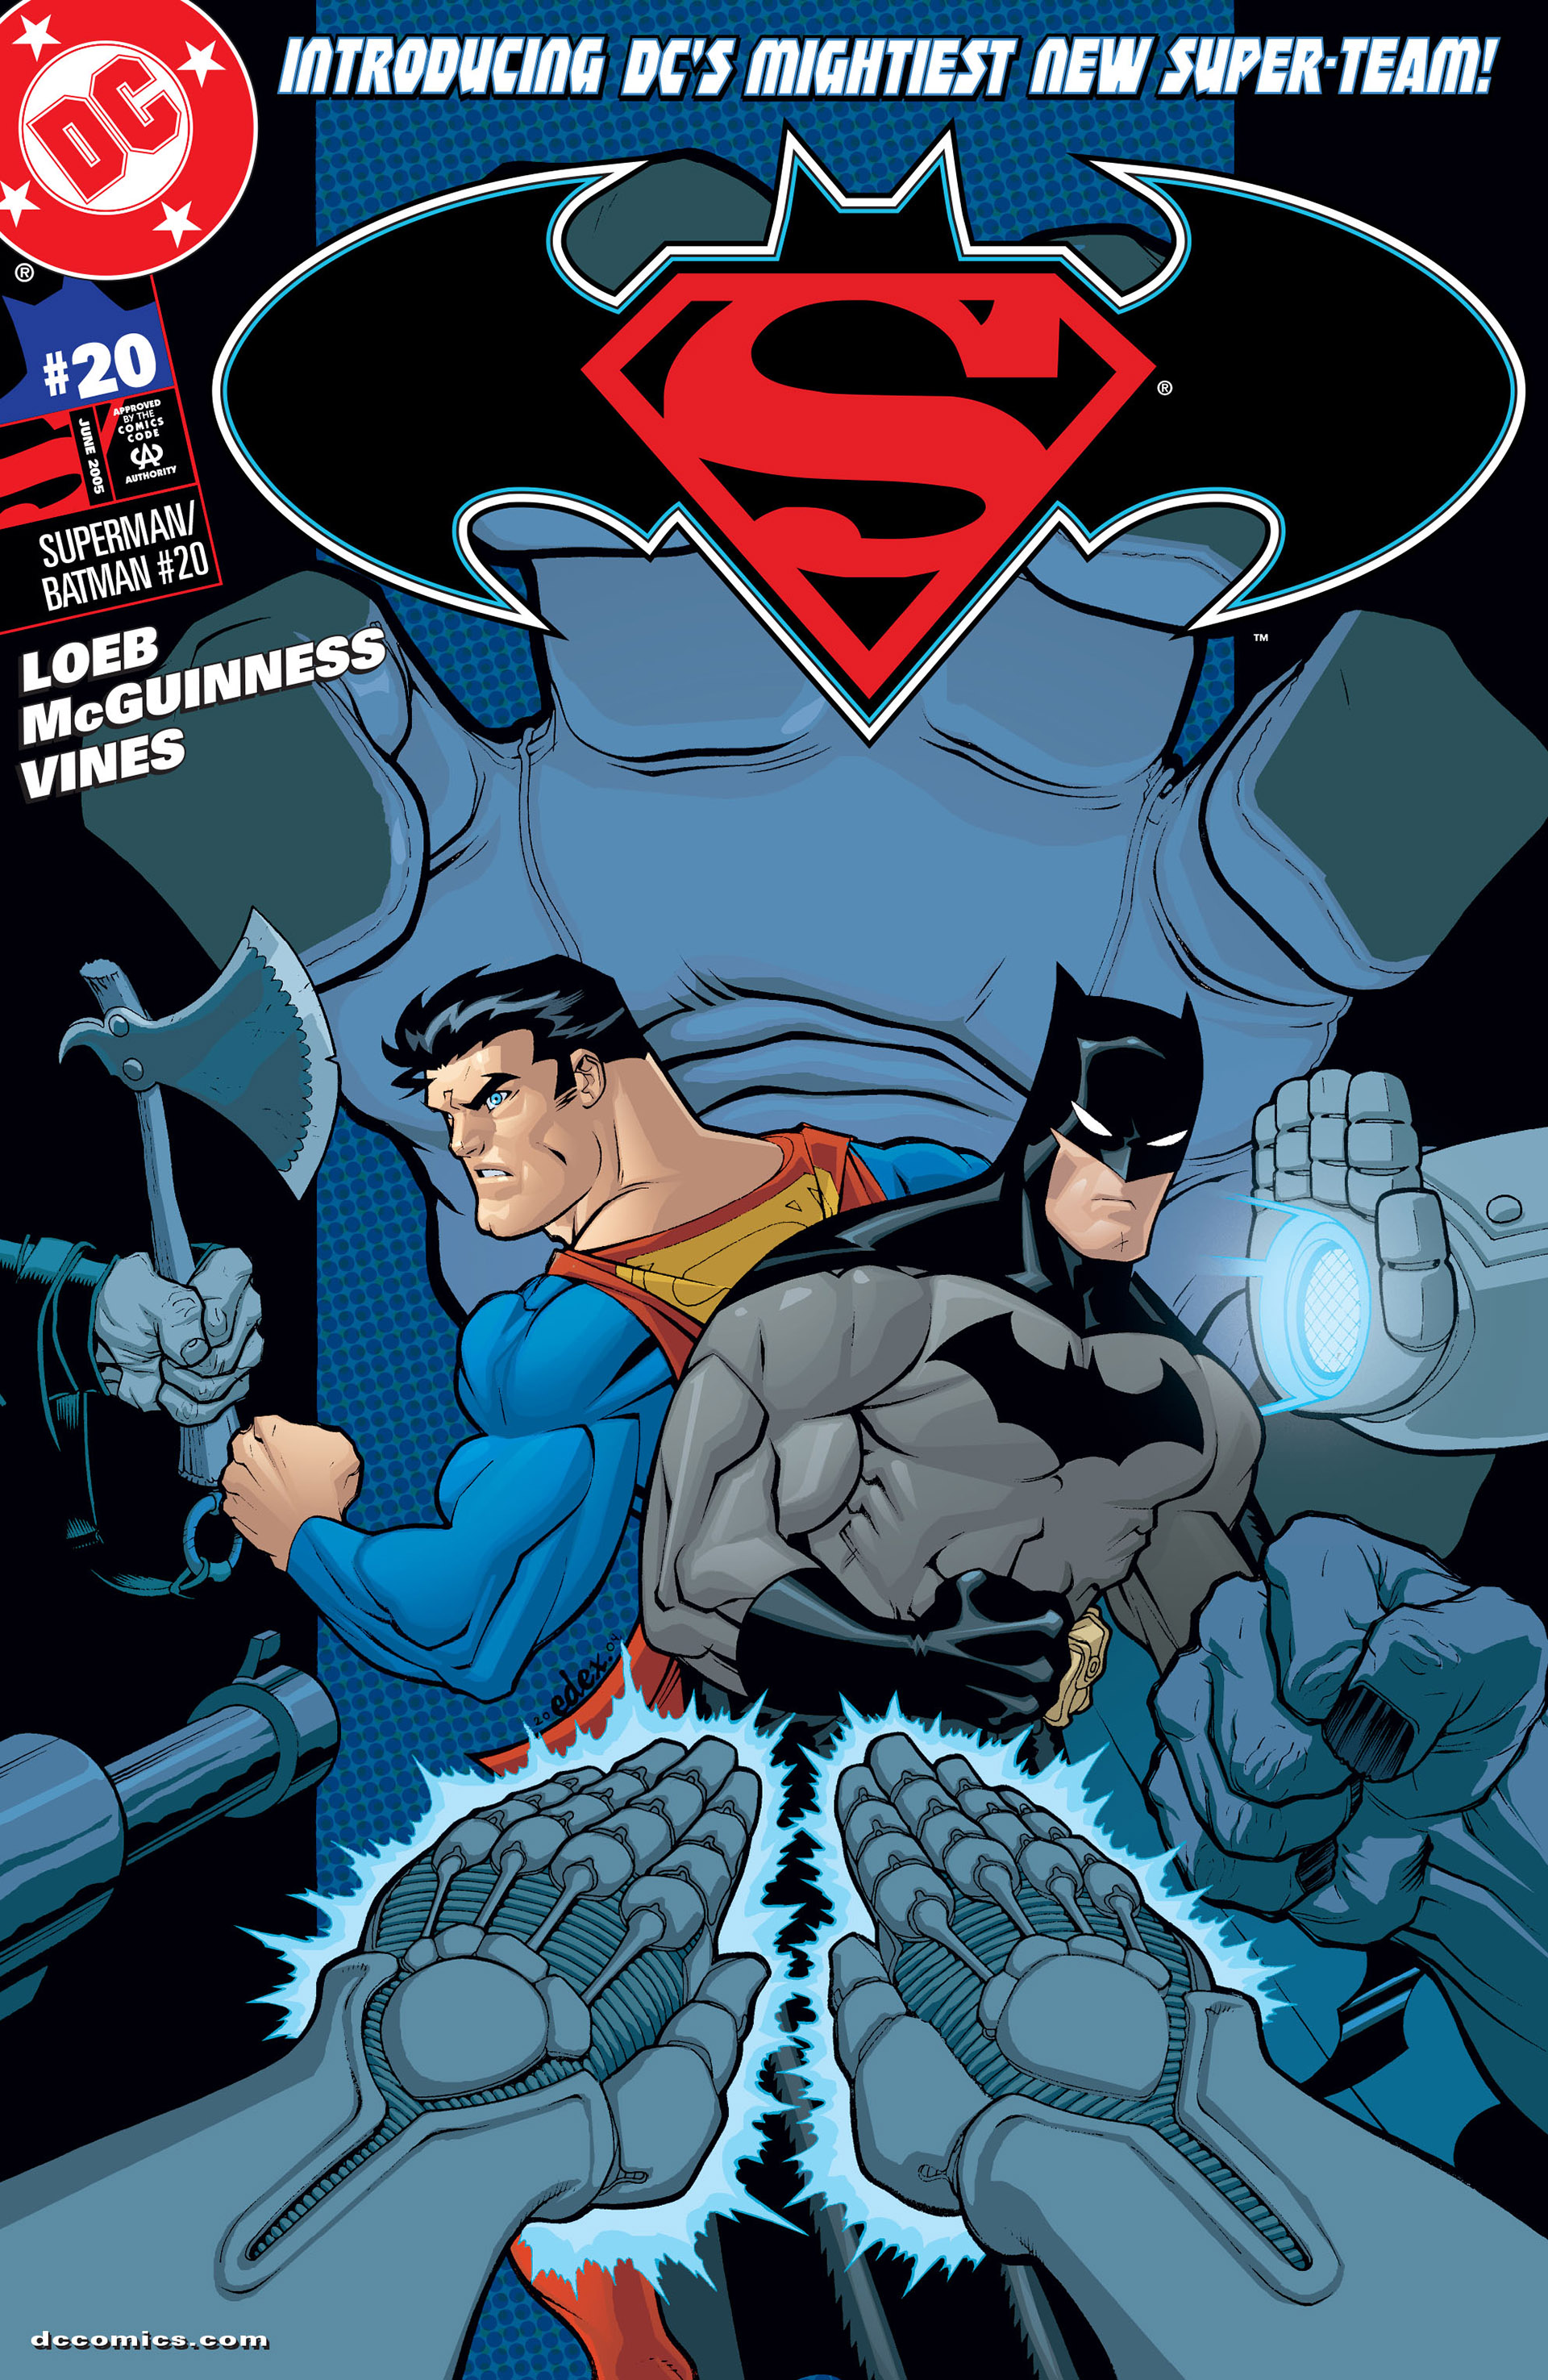 Superman Batman Issue 20 | Read Superman Batman Issue 20 comic online in  high quality. Read Full Comic online for free - Read comics online in high  quality .